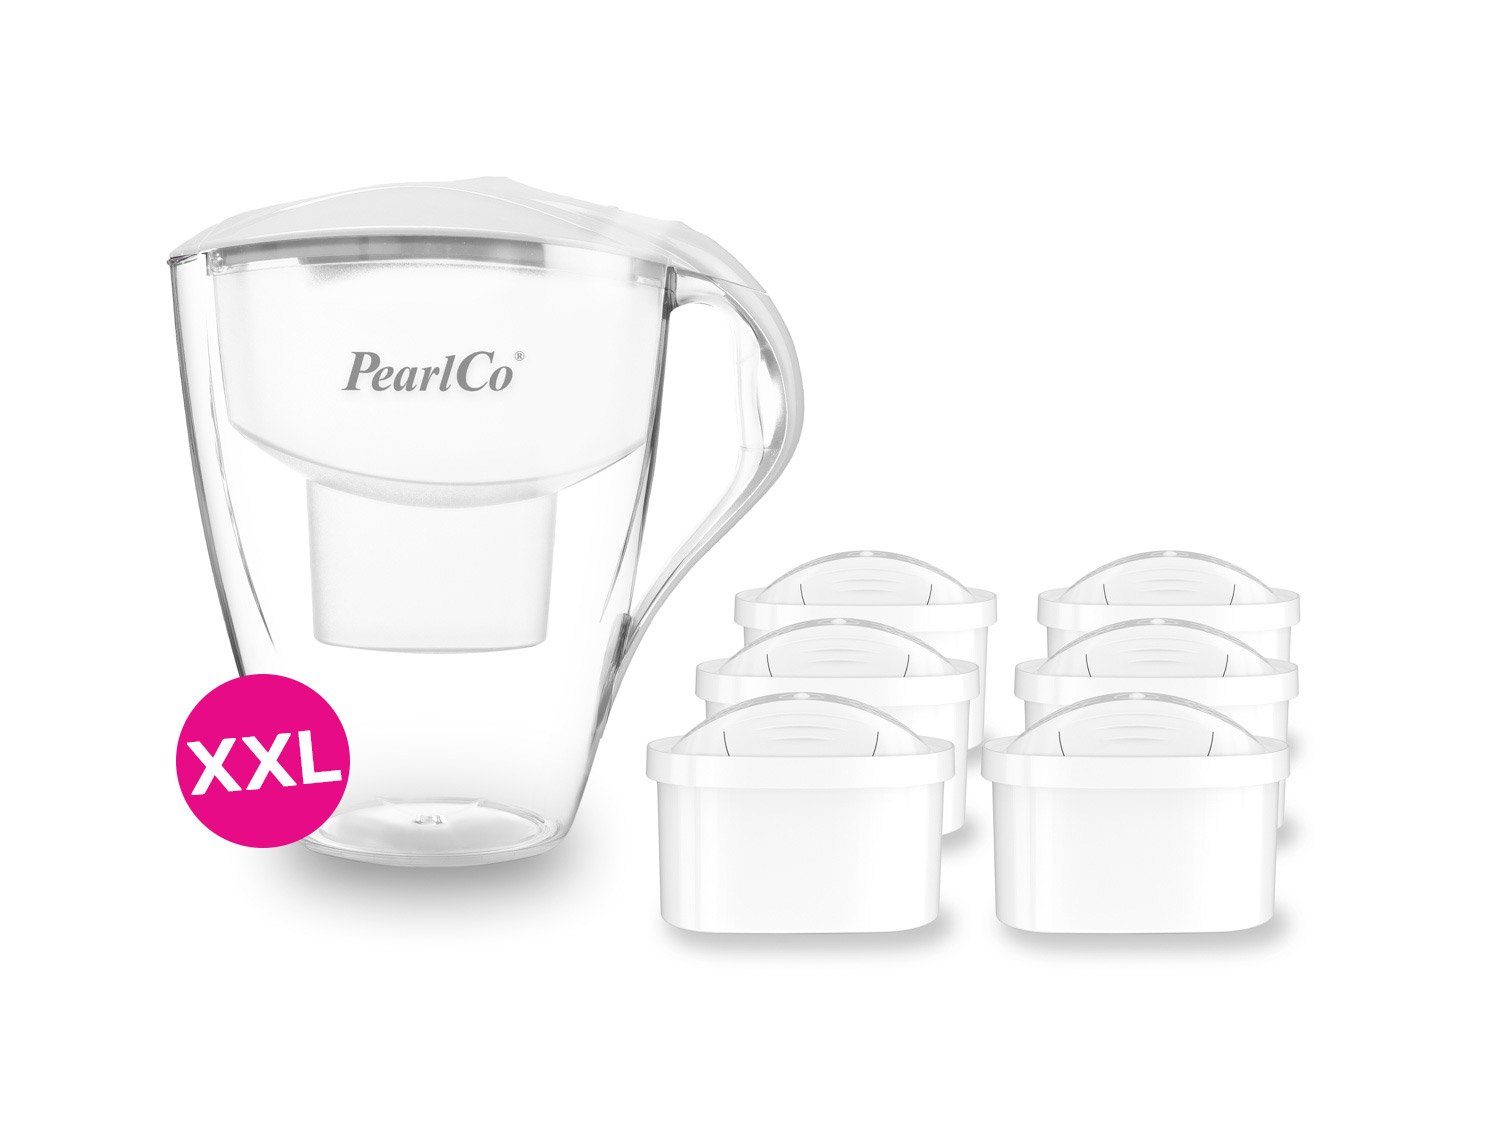 PearlCo Wasserfilter XXL Wasserfilter Family LED - Halbjahres-Paket inkl. 6 unimax Filterka